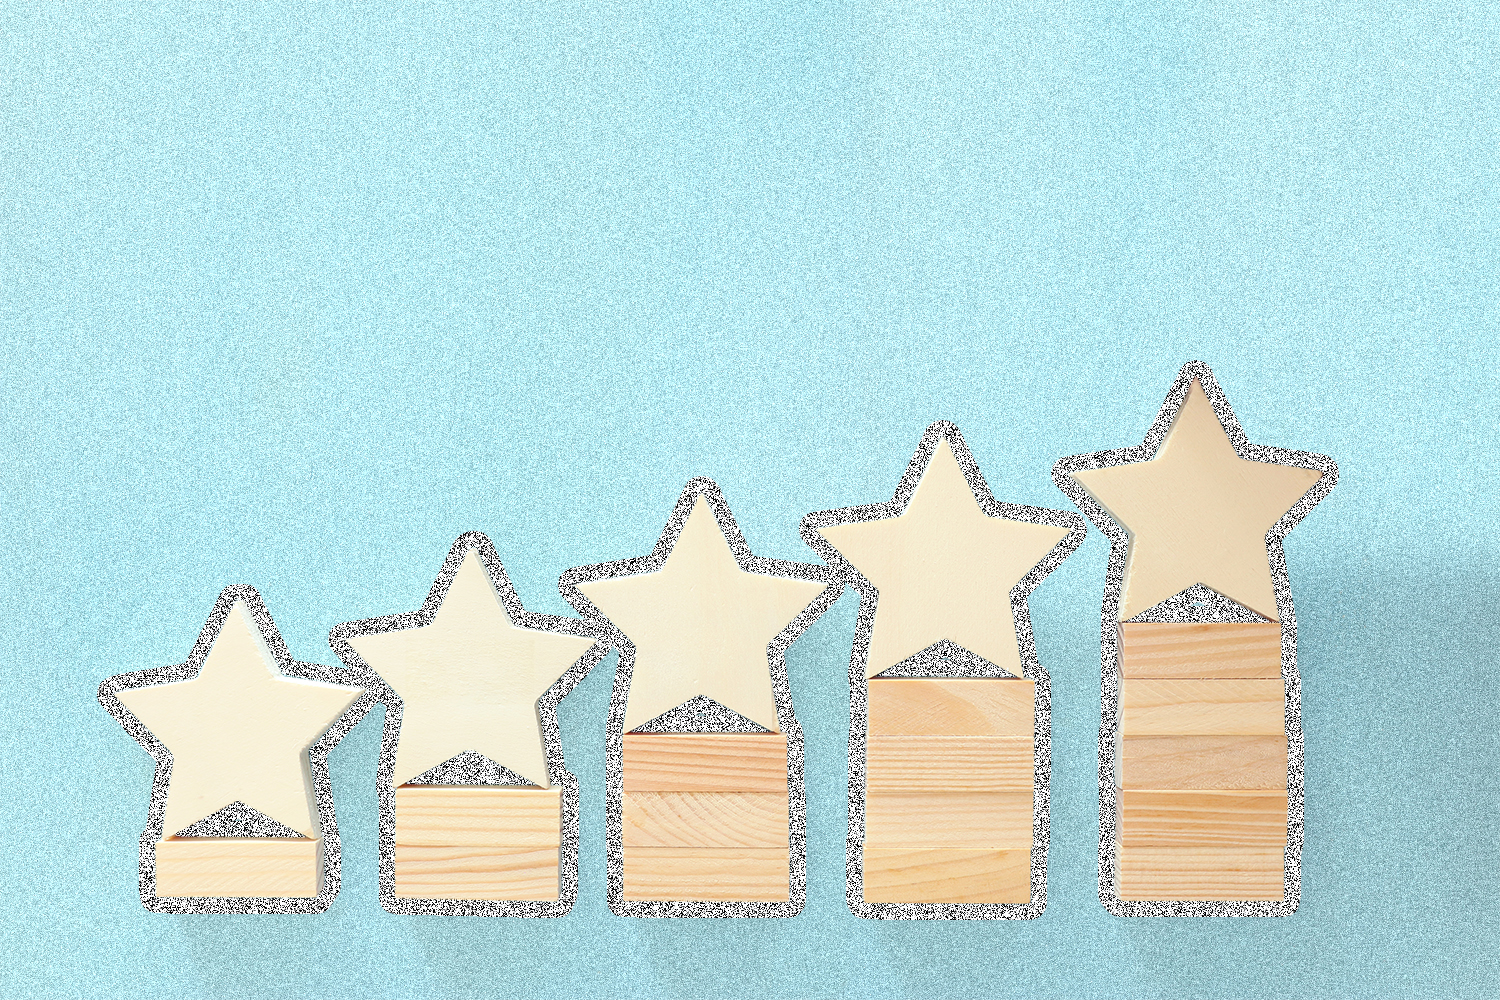 Image of 5 wooden stars on wooden blocks